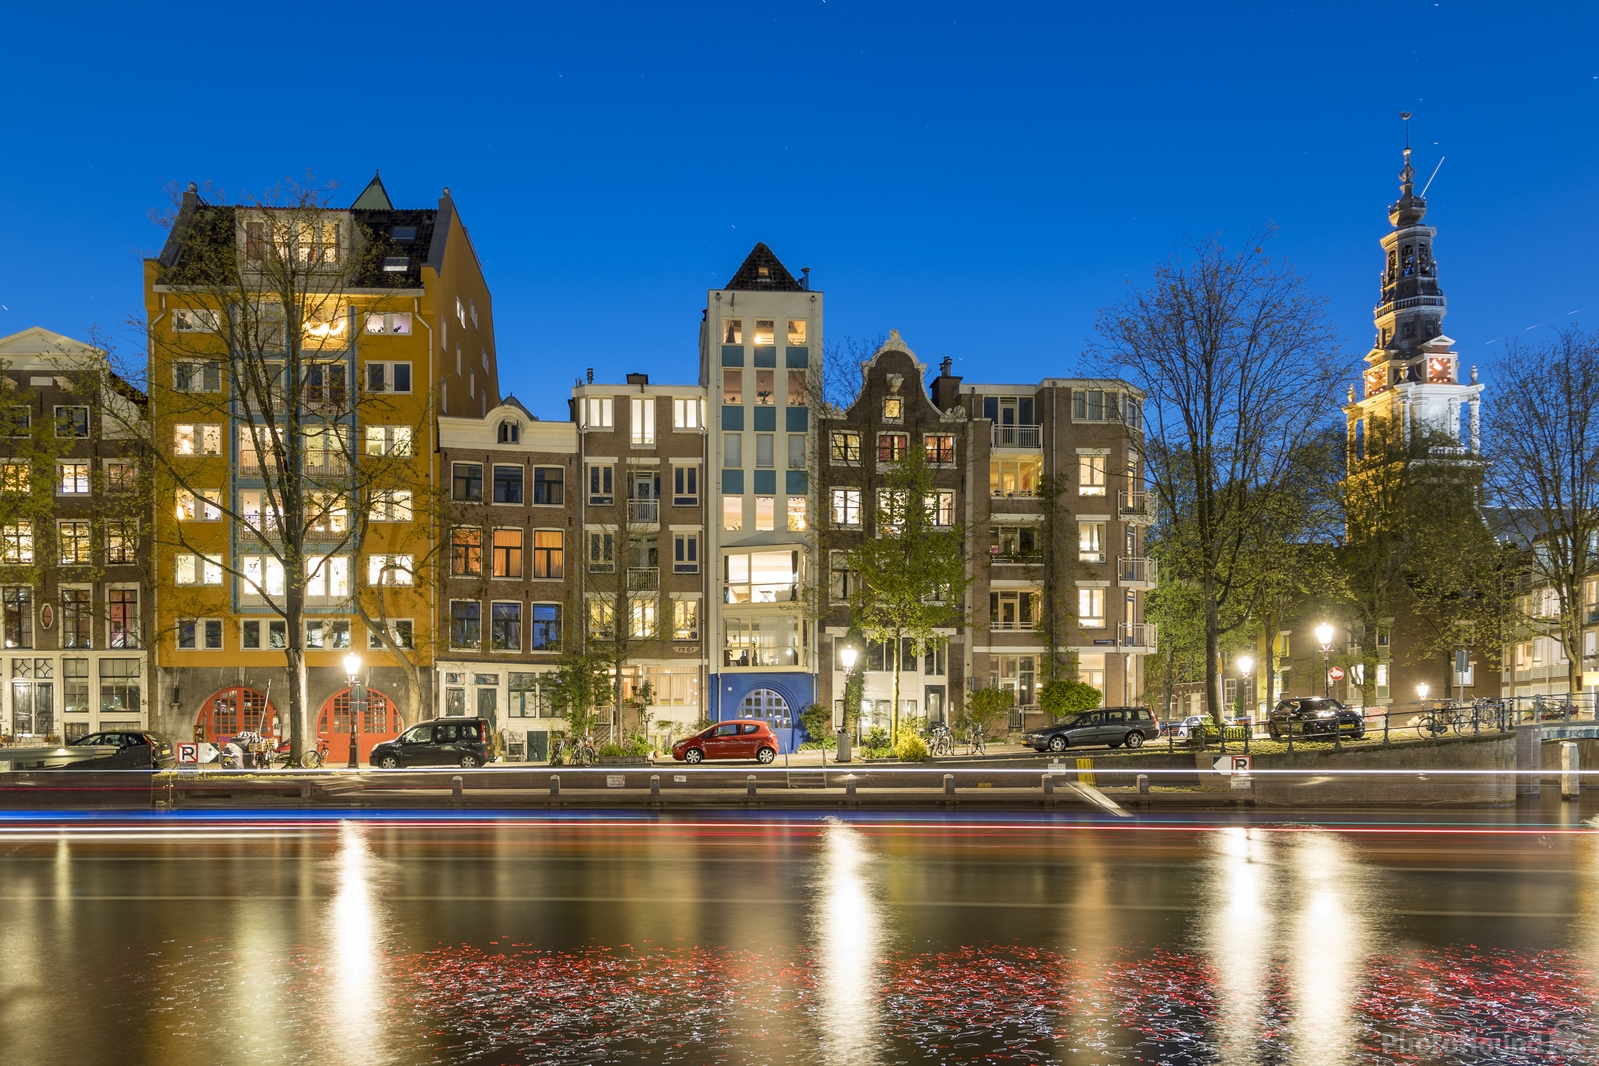 Image of Zwanenburgwal, Amsterdam by Jo Wheeler